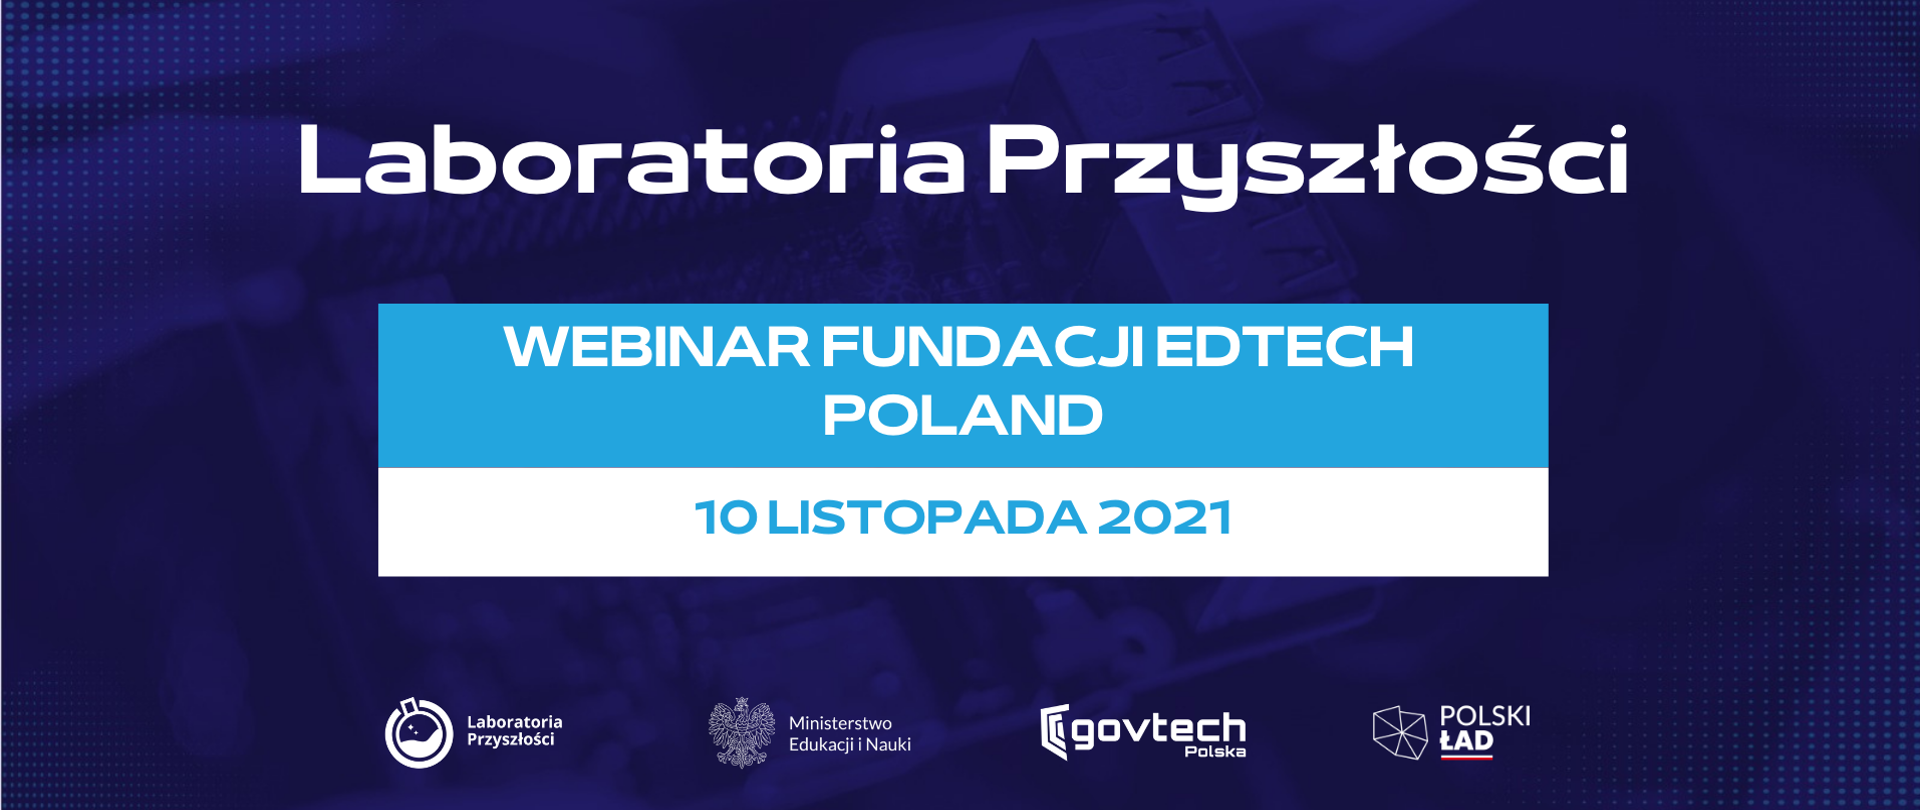 Webinar Fundacji EdTech Poland
10 listopada 2021
